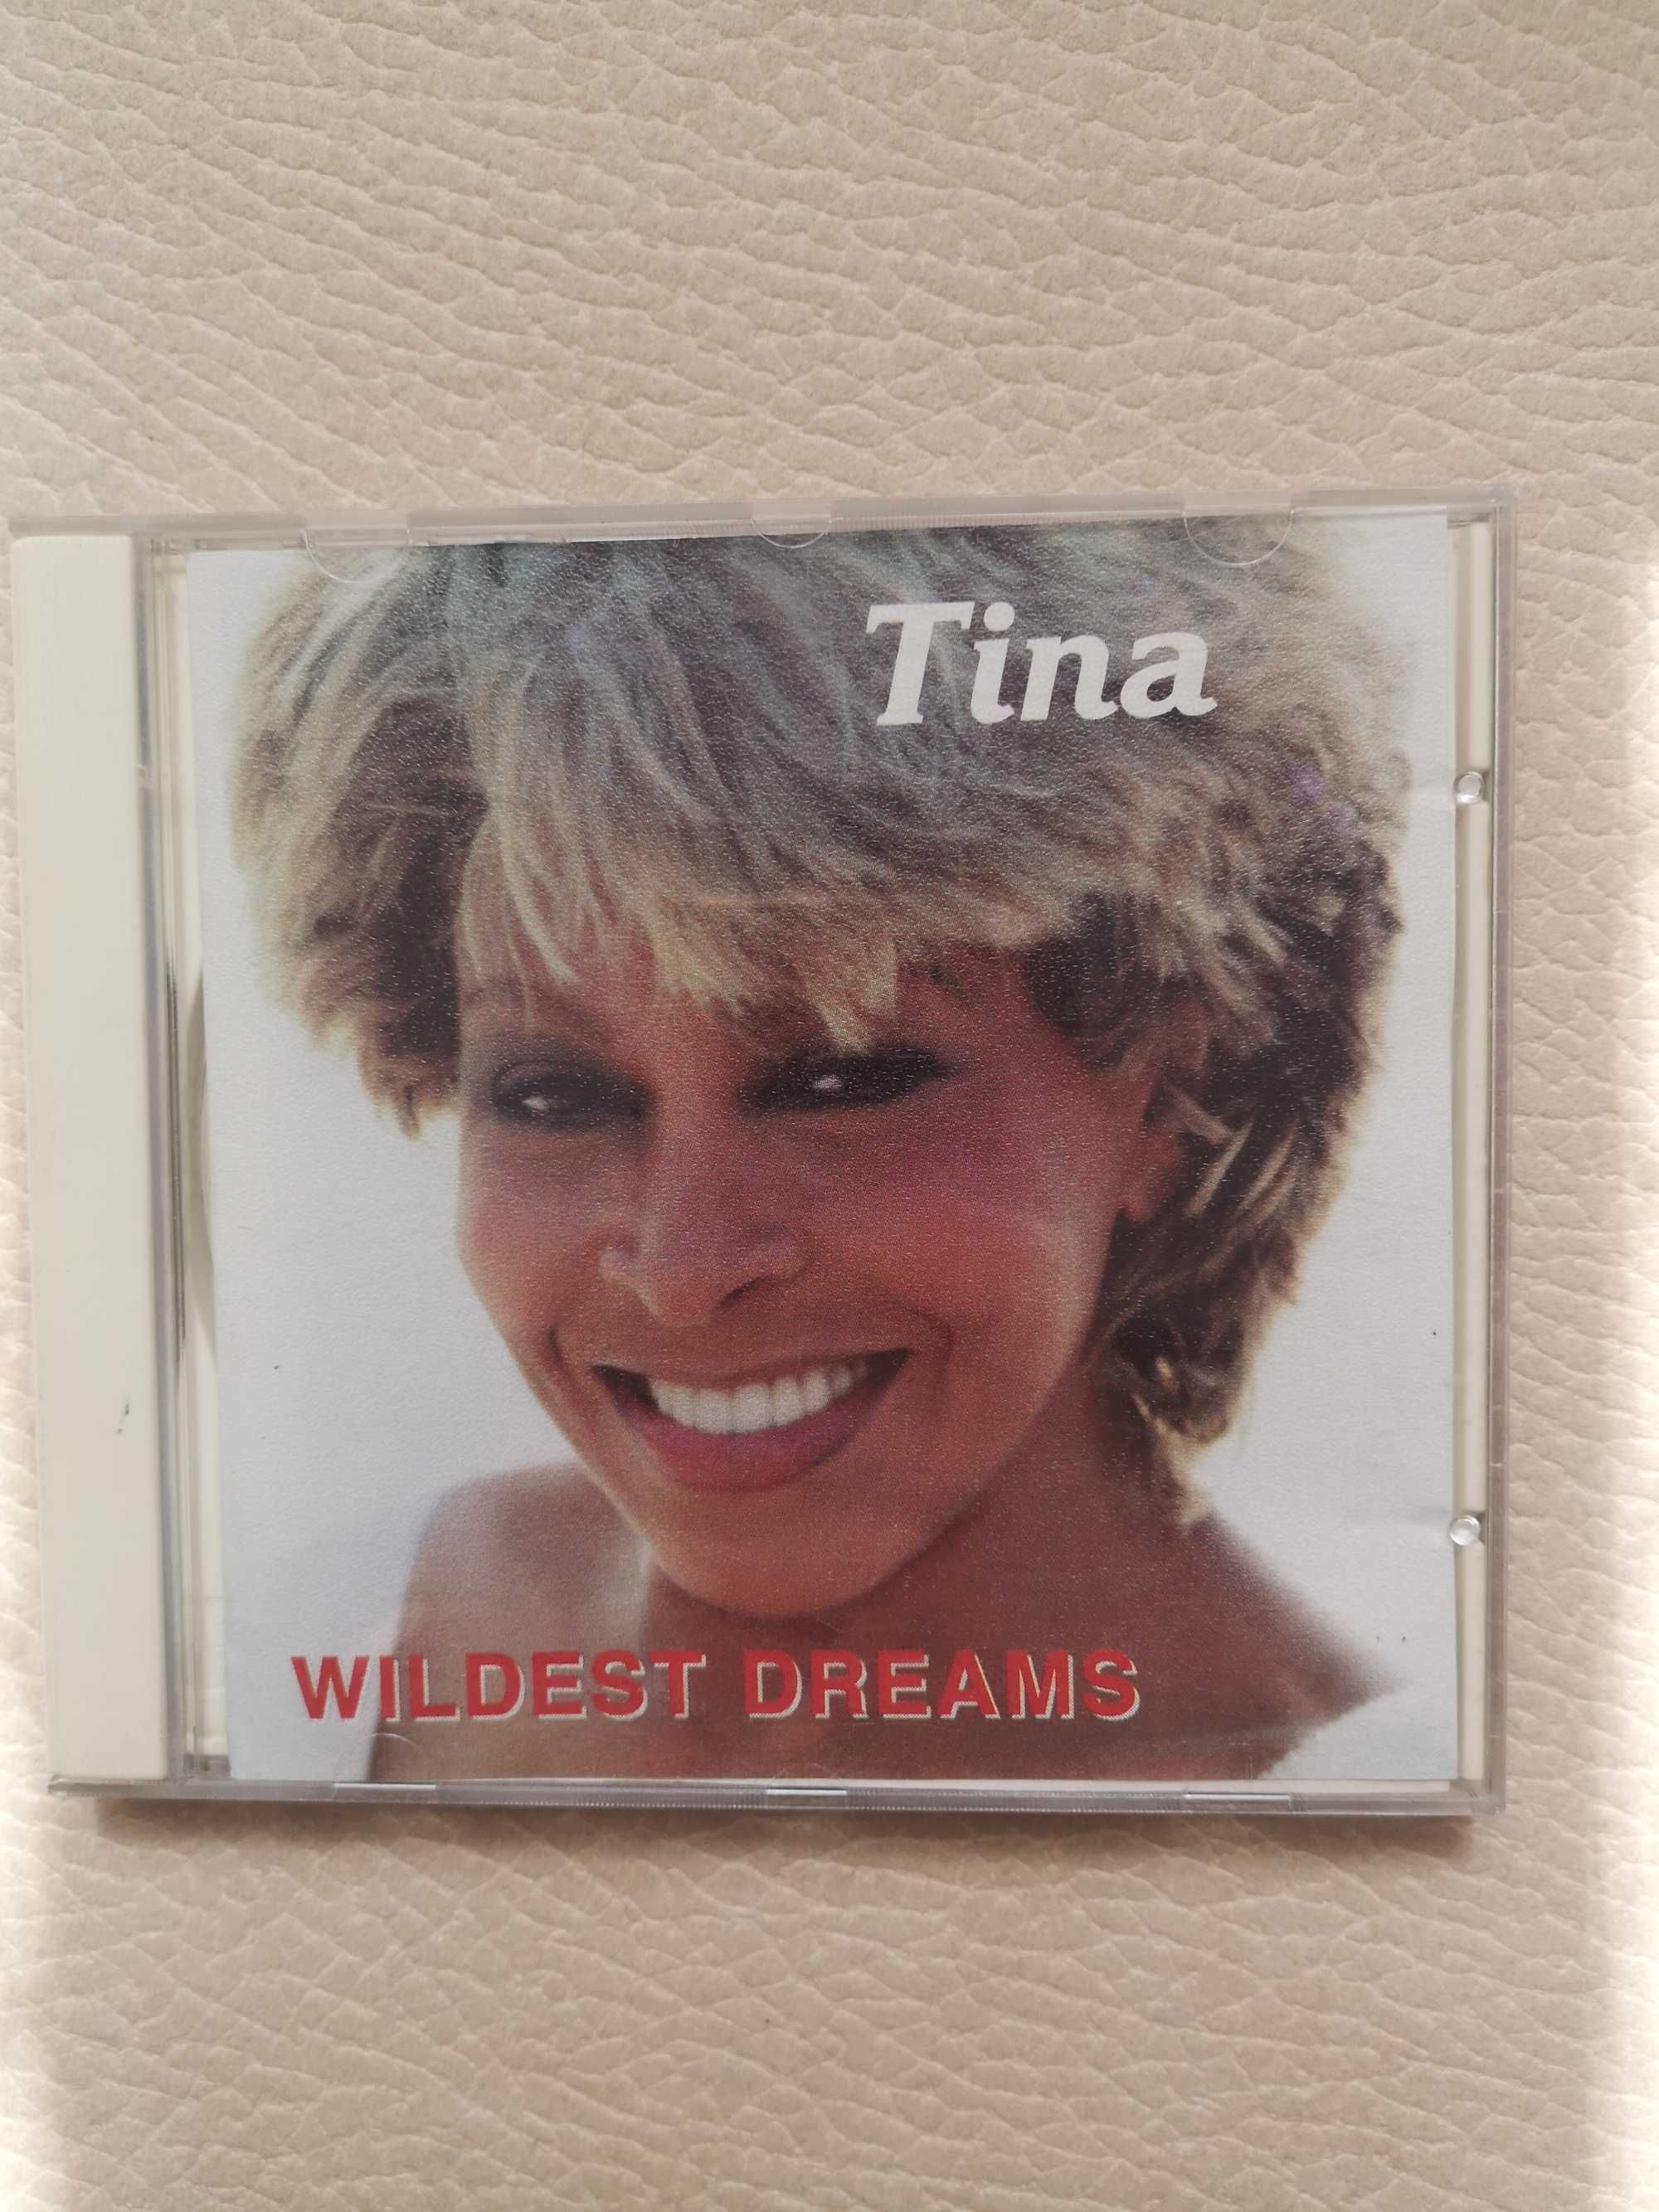 Płyta CD Tina Wildest Dreams